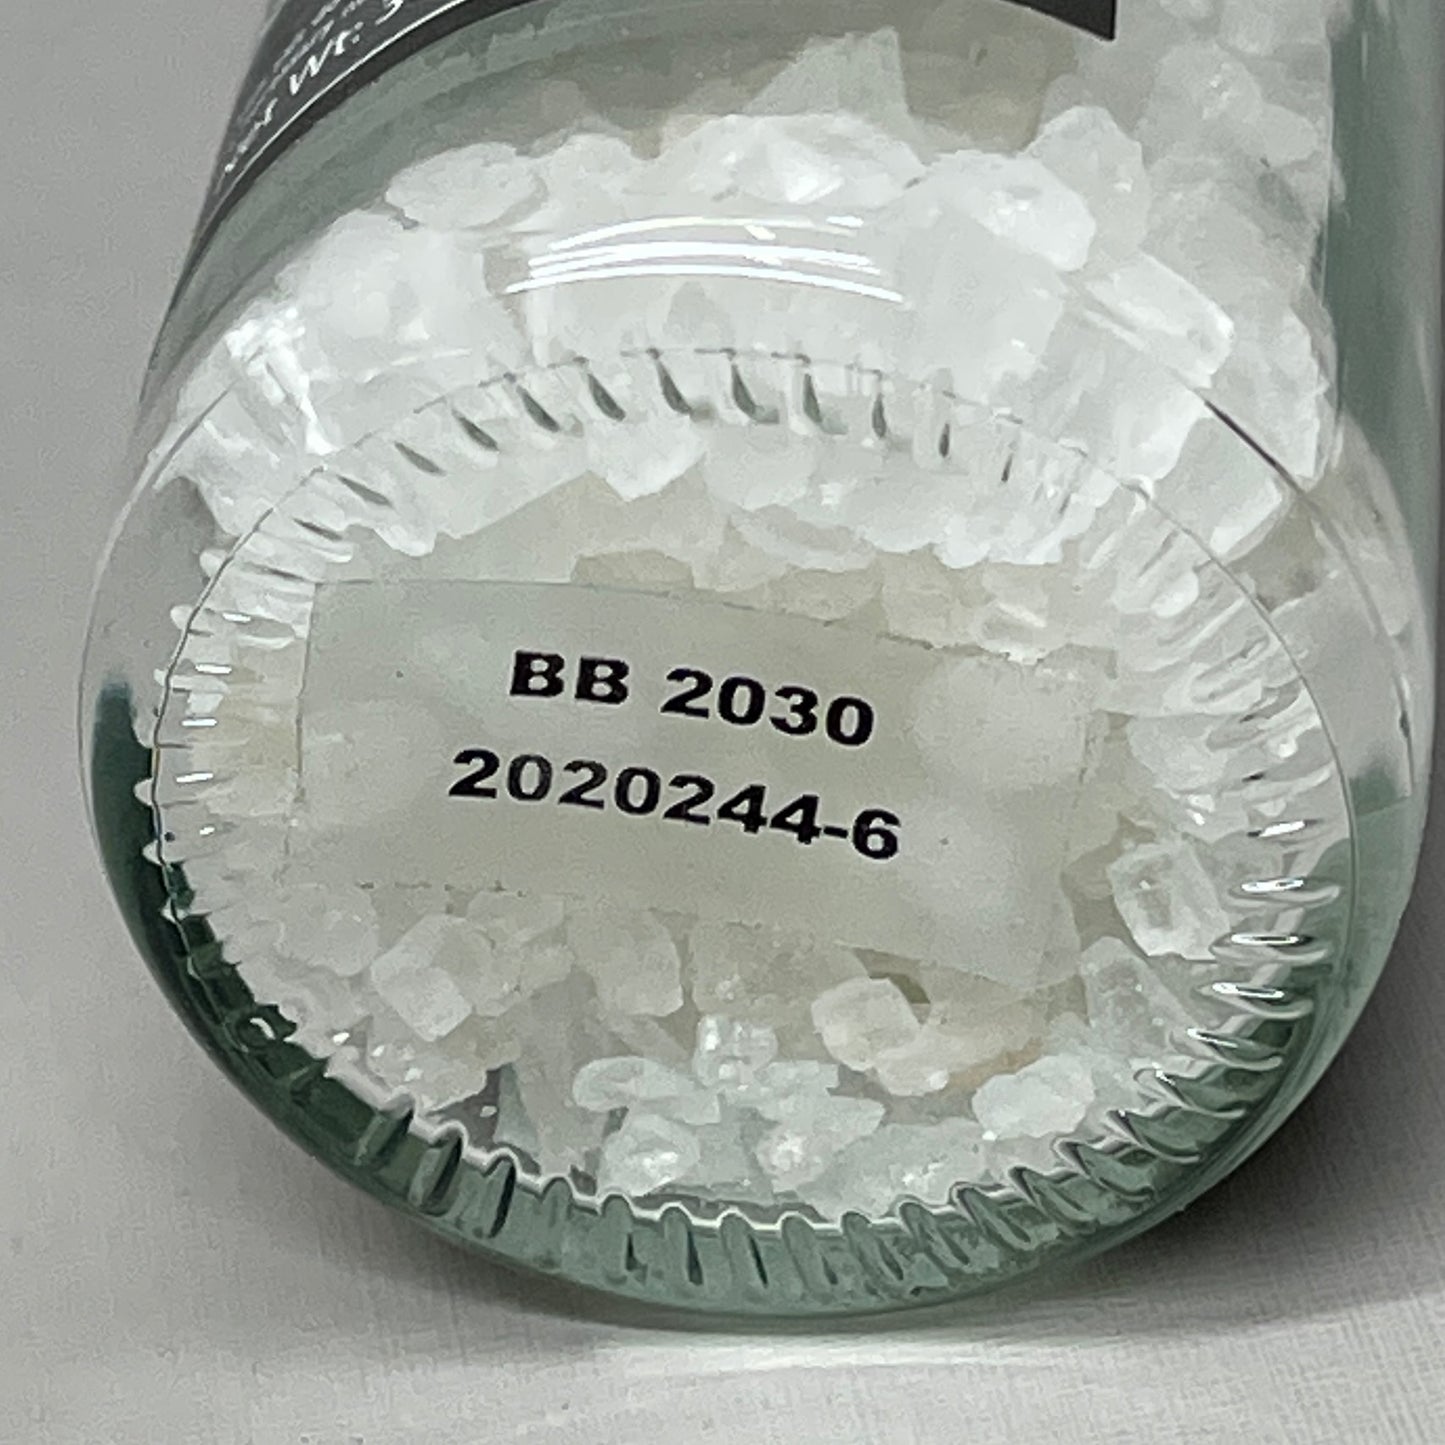 NATIERRA Nature & Earth Himalania Coarse Ice Salt 3 oz Glass Grinder /2 pack (New)